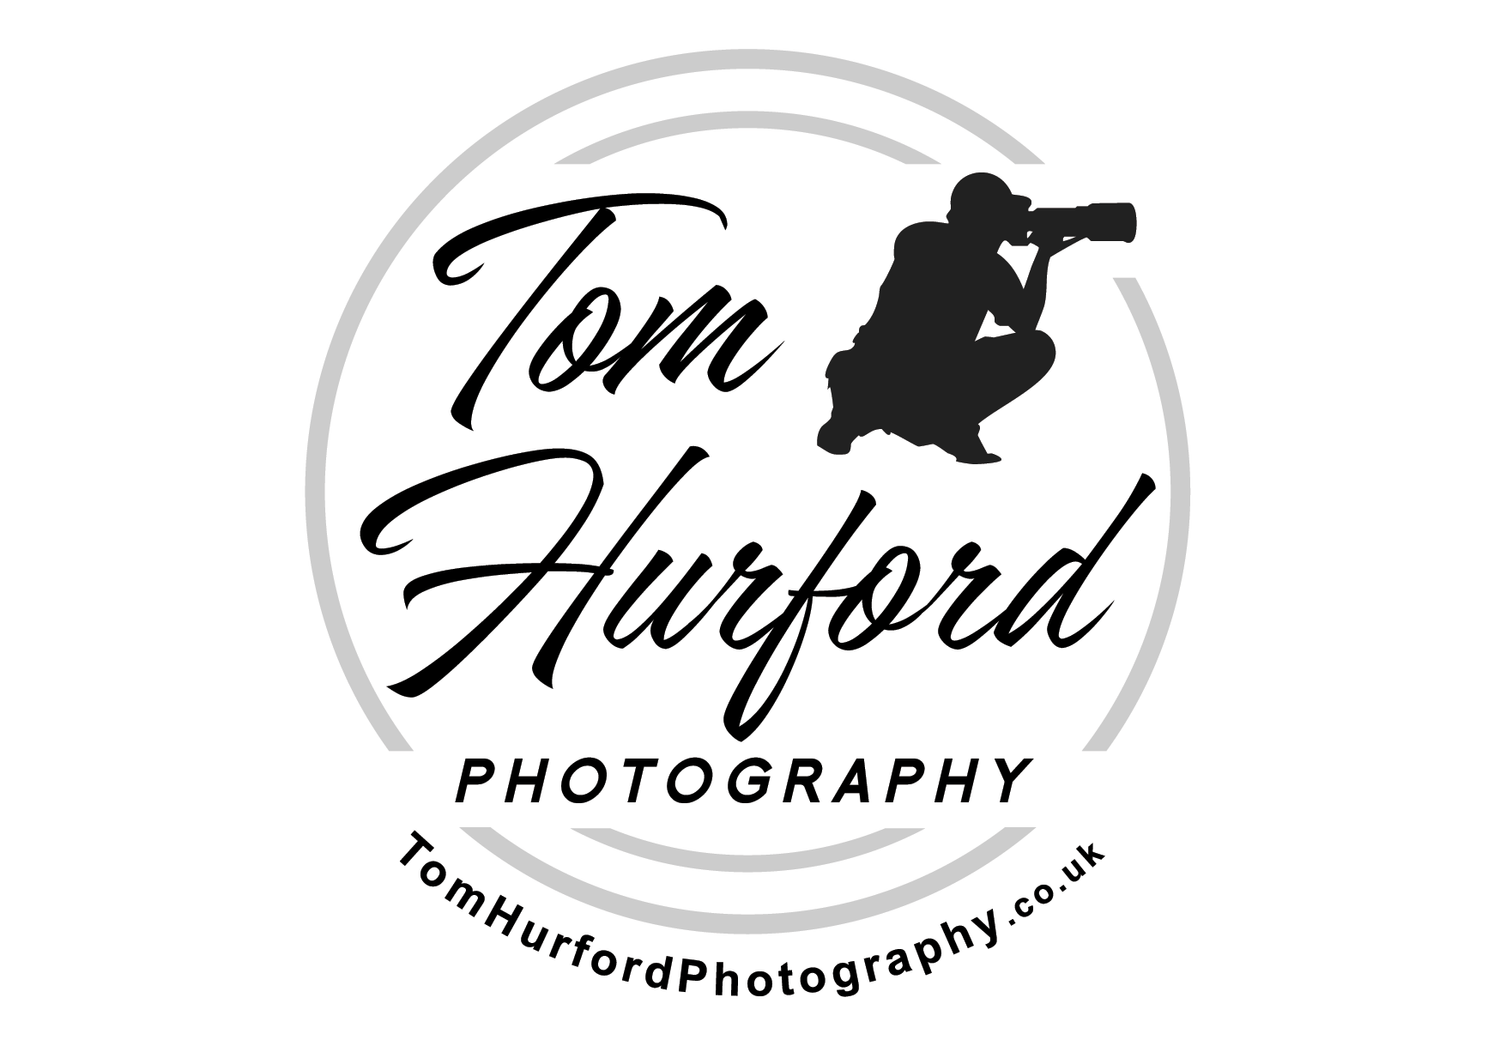 Tom Hurford Photography